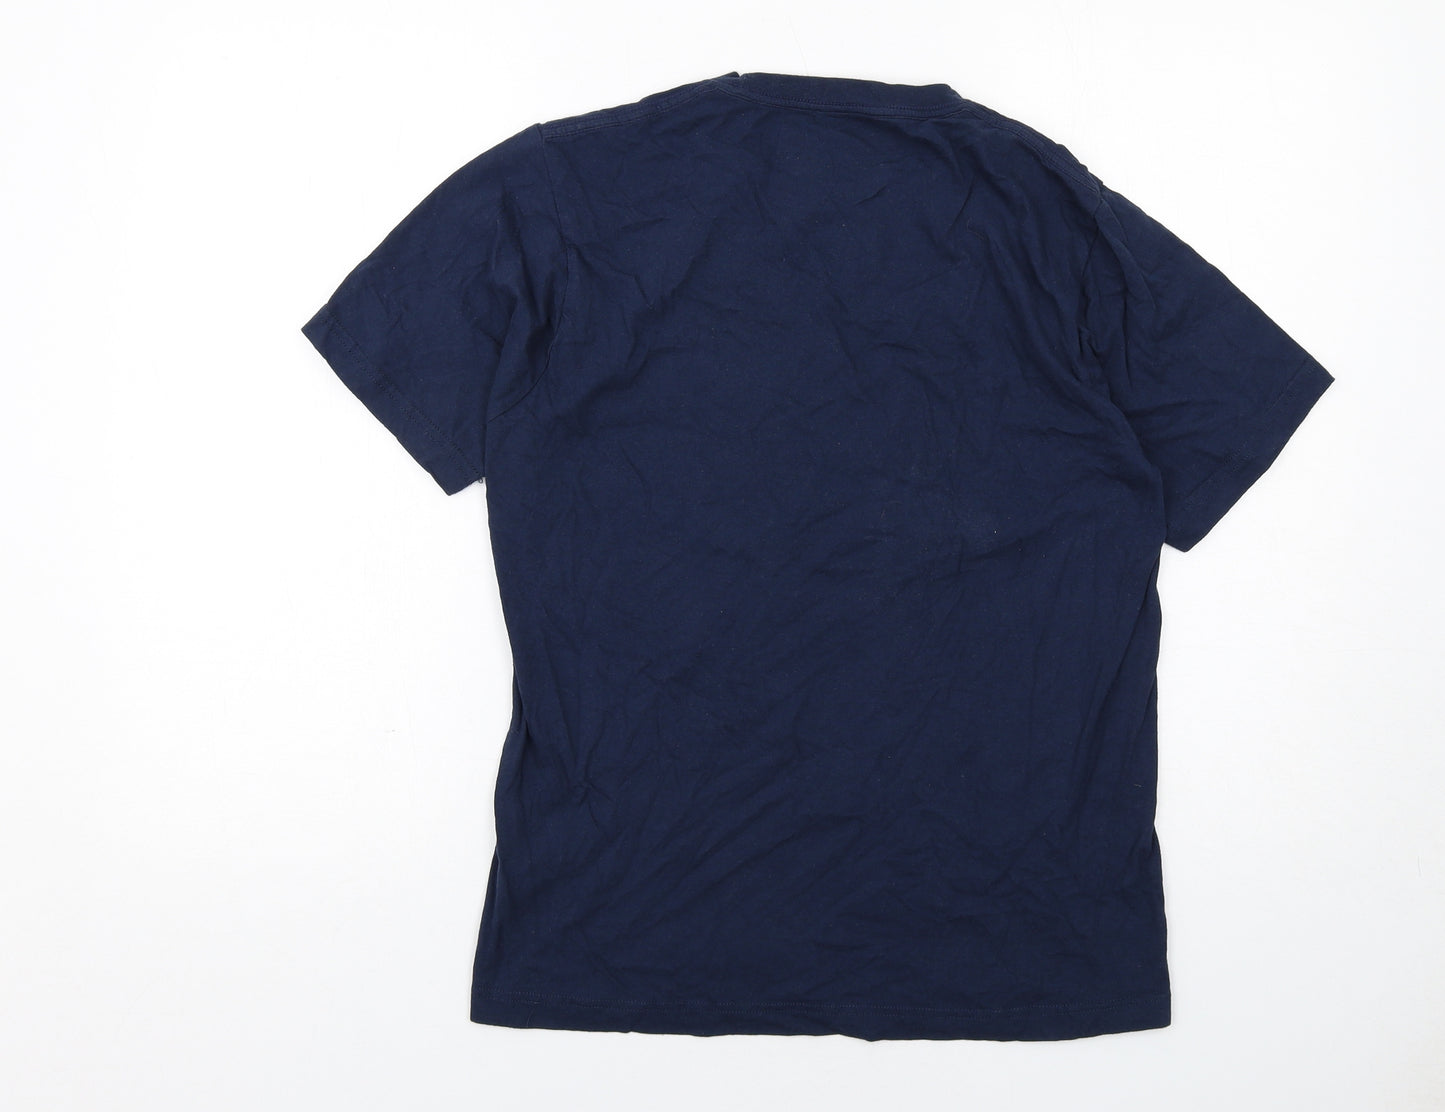 DKNY Mens Blue Cotton T-Shirt Size M Round Neck